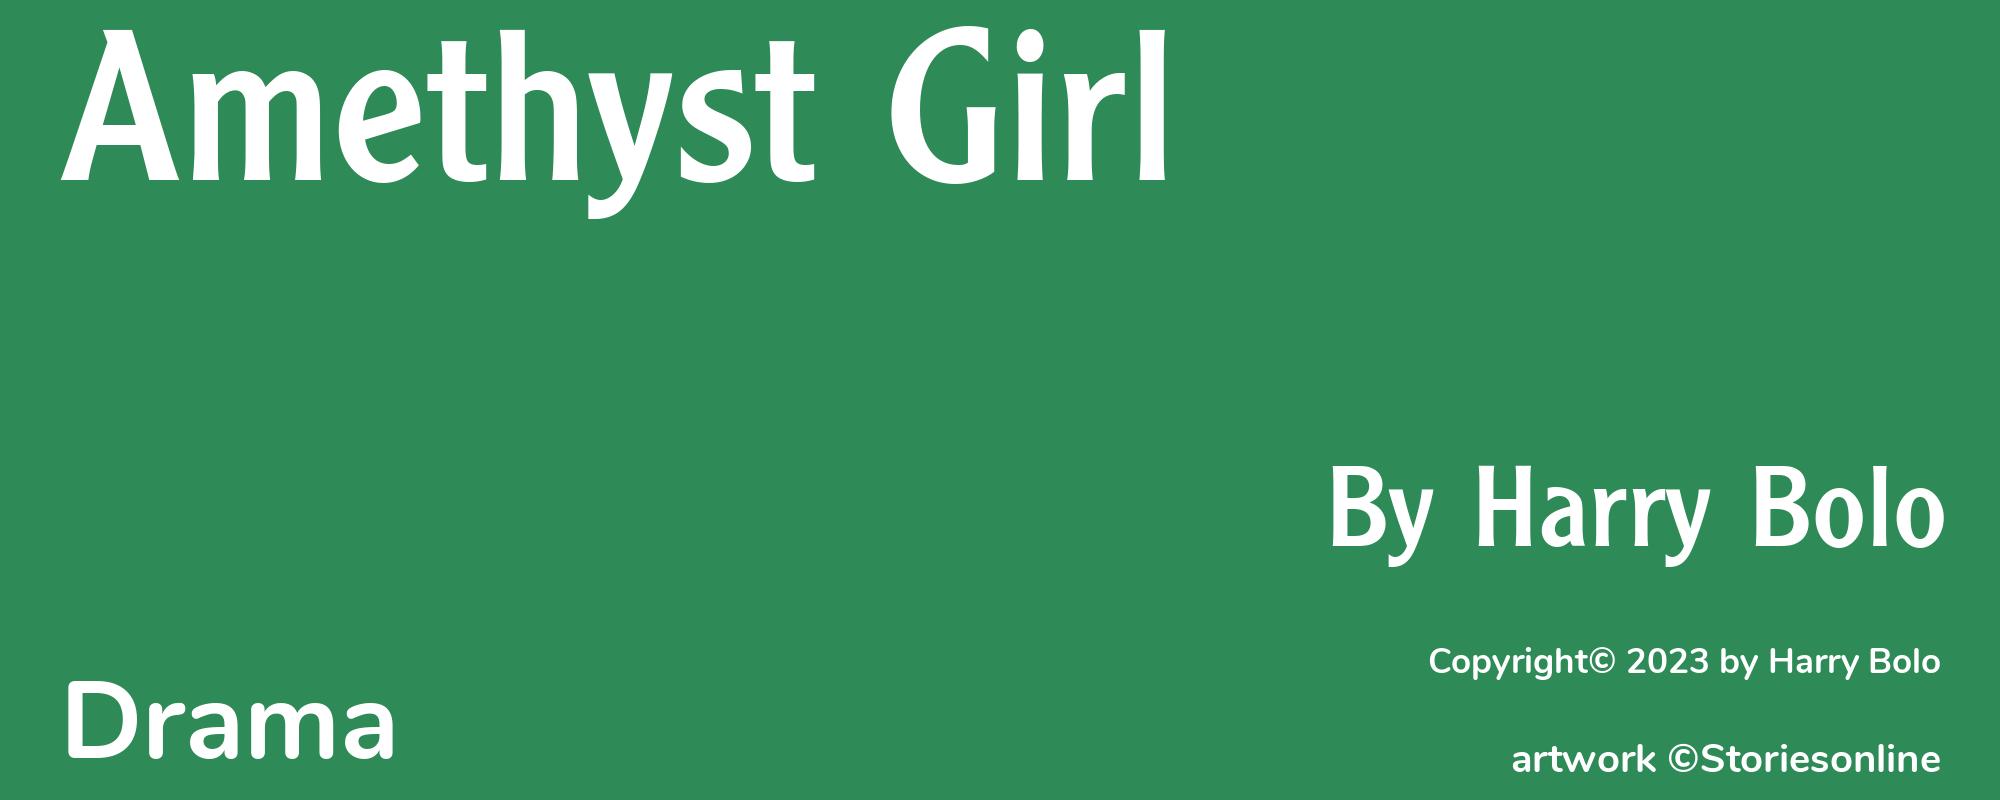 Amethyst Girl - Cover